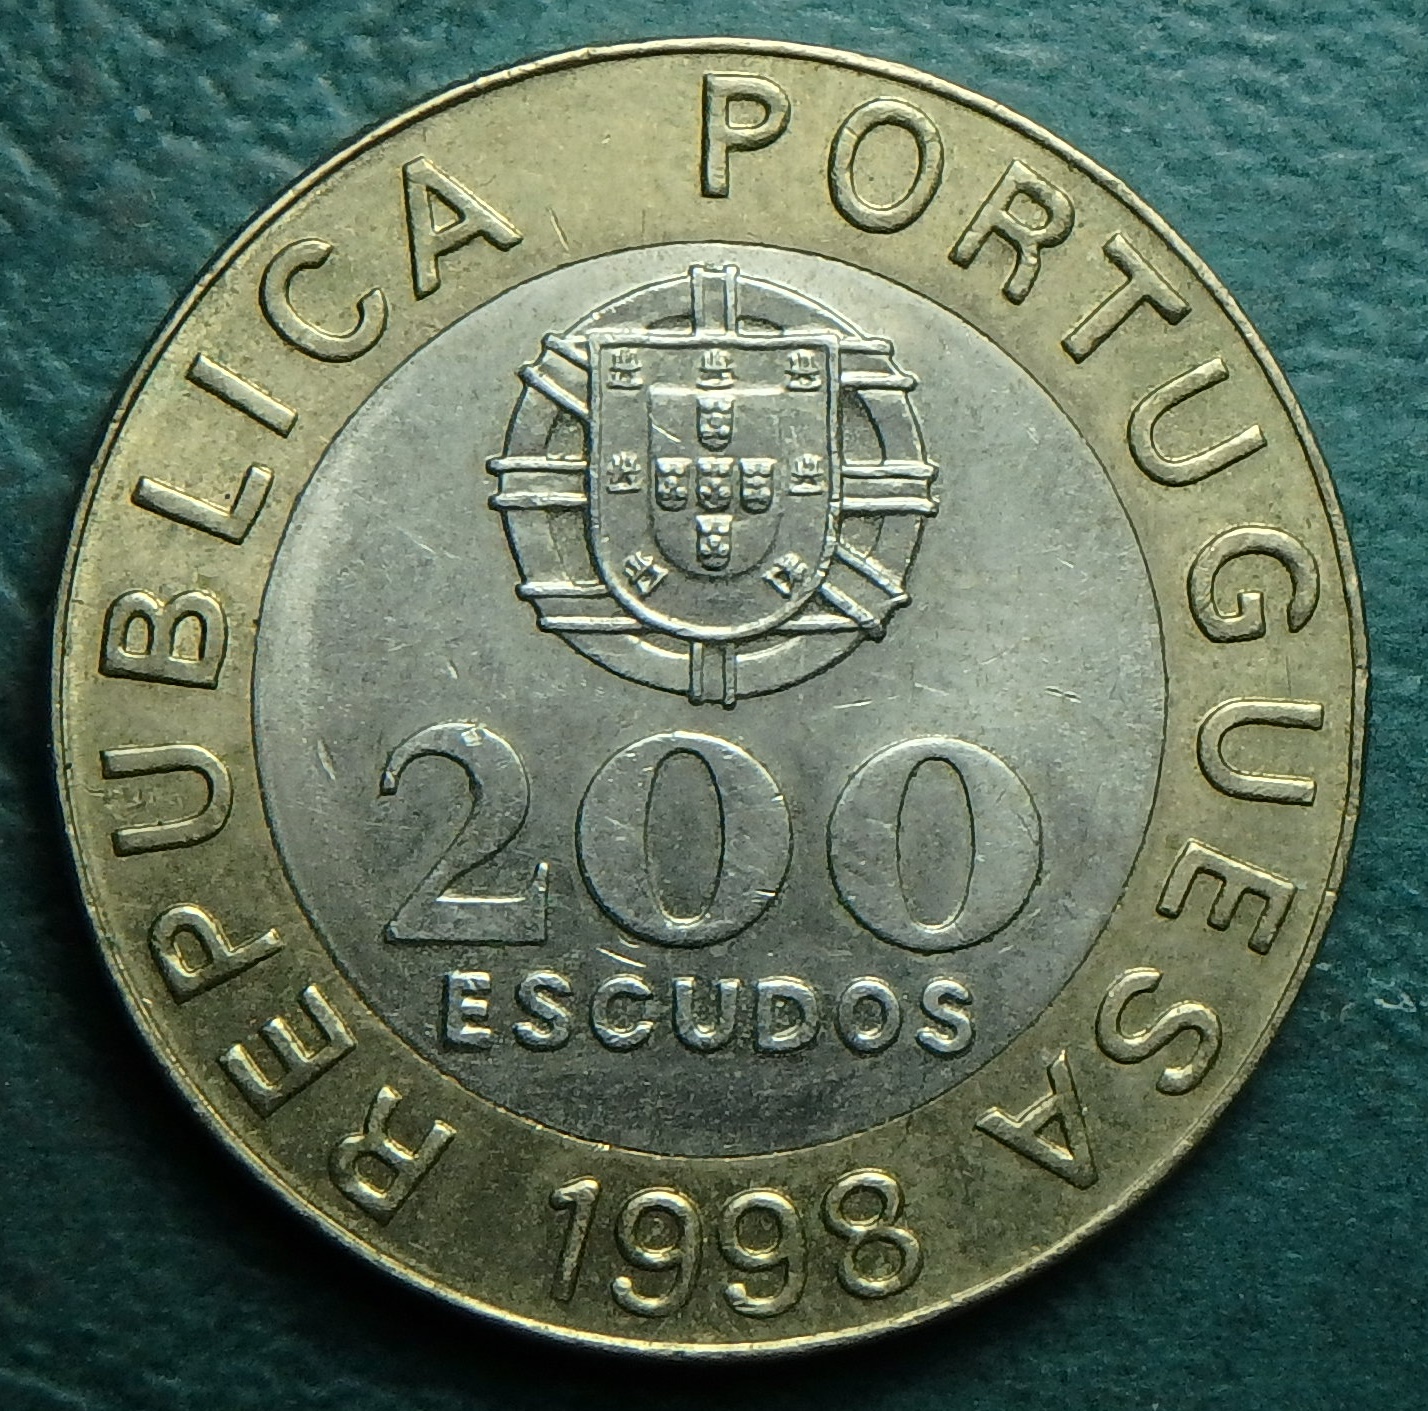 1998 PT 200 e rev.JPG